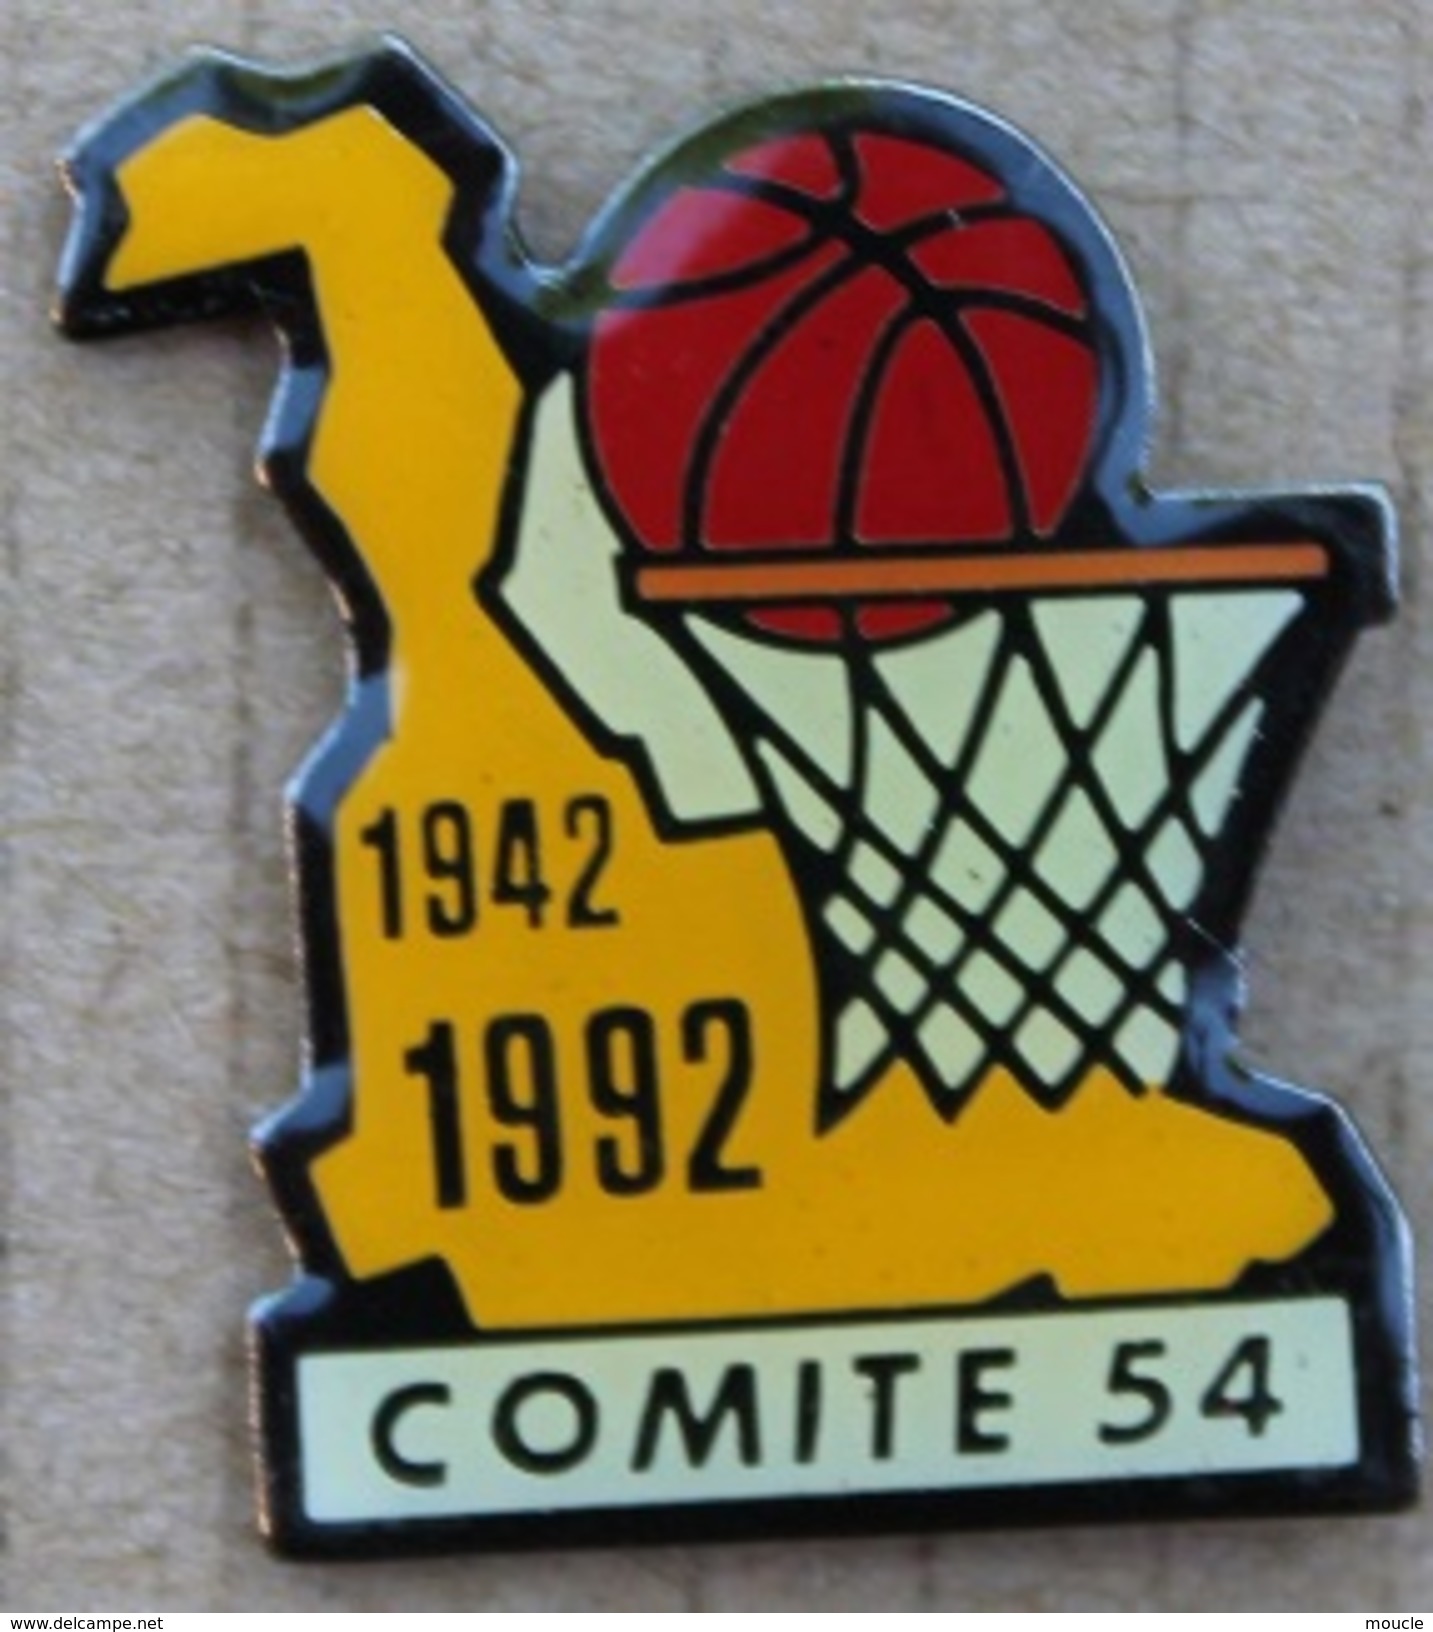 BASKETBALL - PANIER - BALLON - 50 ANS COMITE 54 - 1942 / 1992 - DEPARTEMENT FRANCAIS - FRANCE -                  (JAUNE) - Basketbal